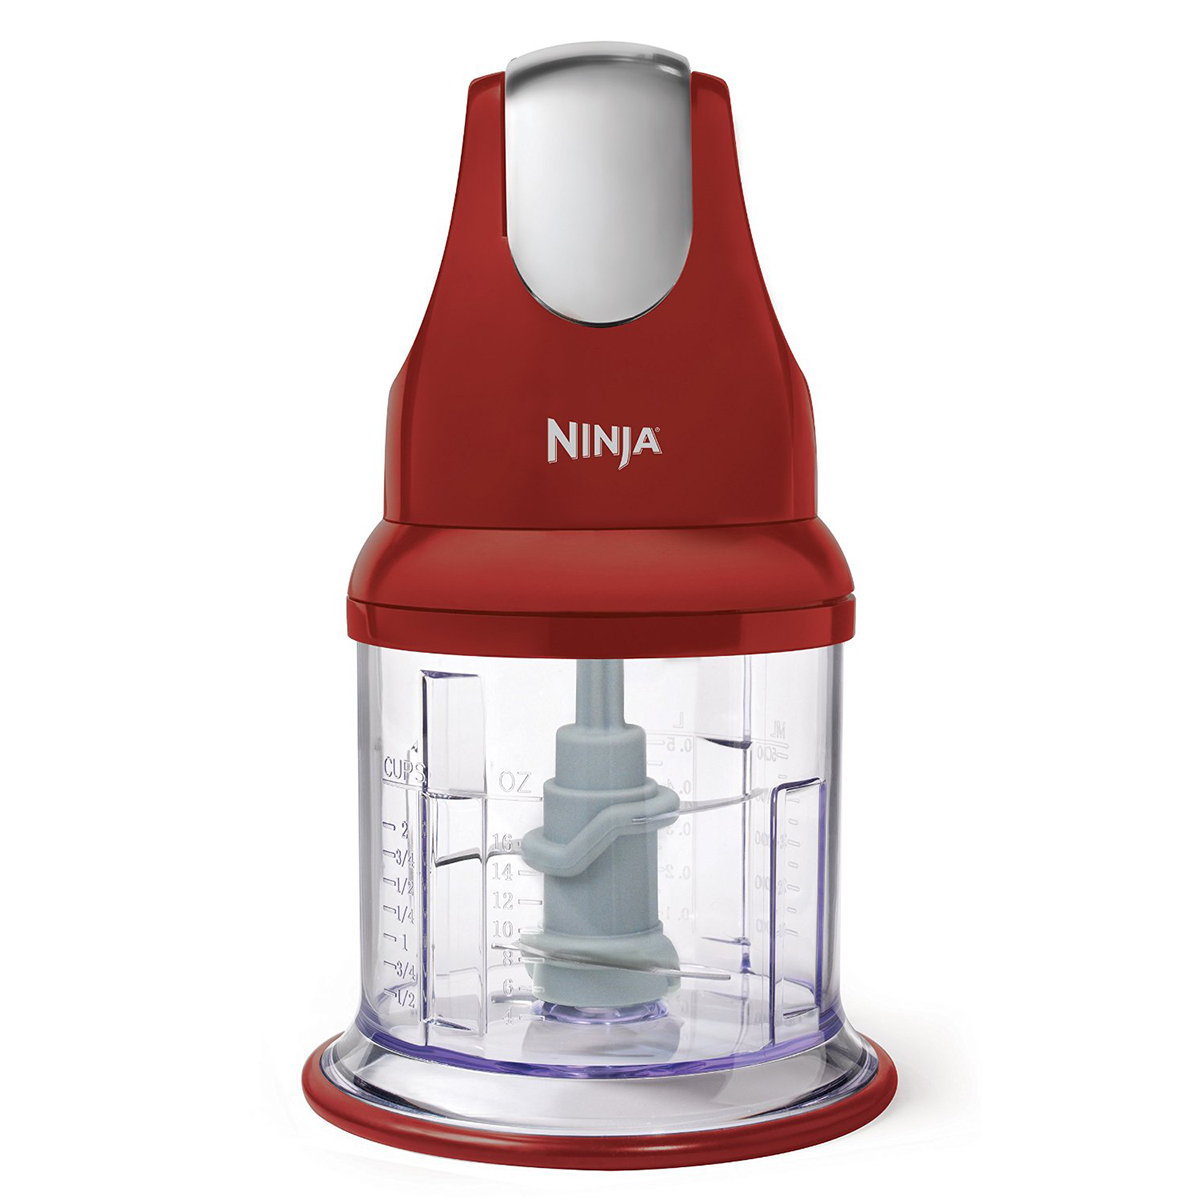 Ninja Express Chopper - Red (NJ100) - image 2 of 2